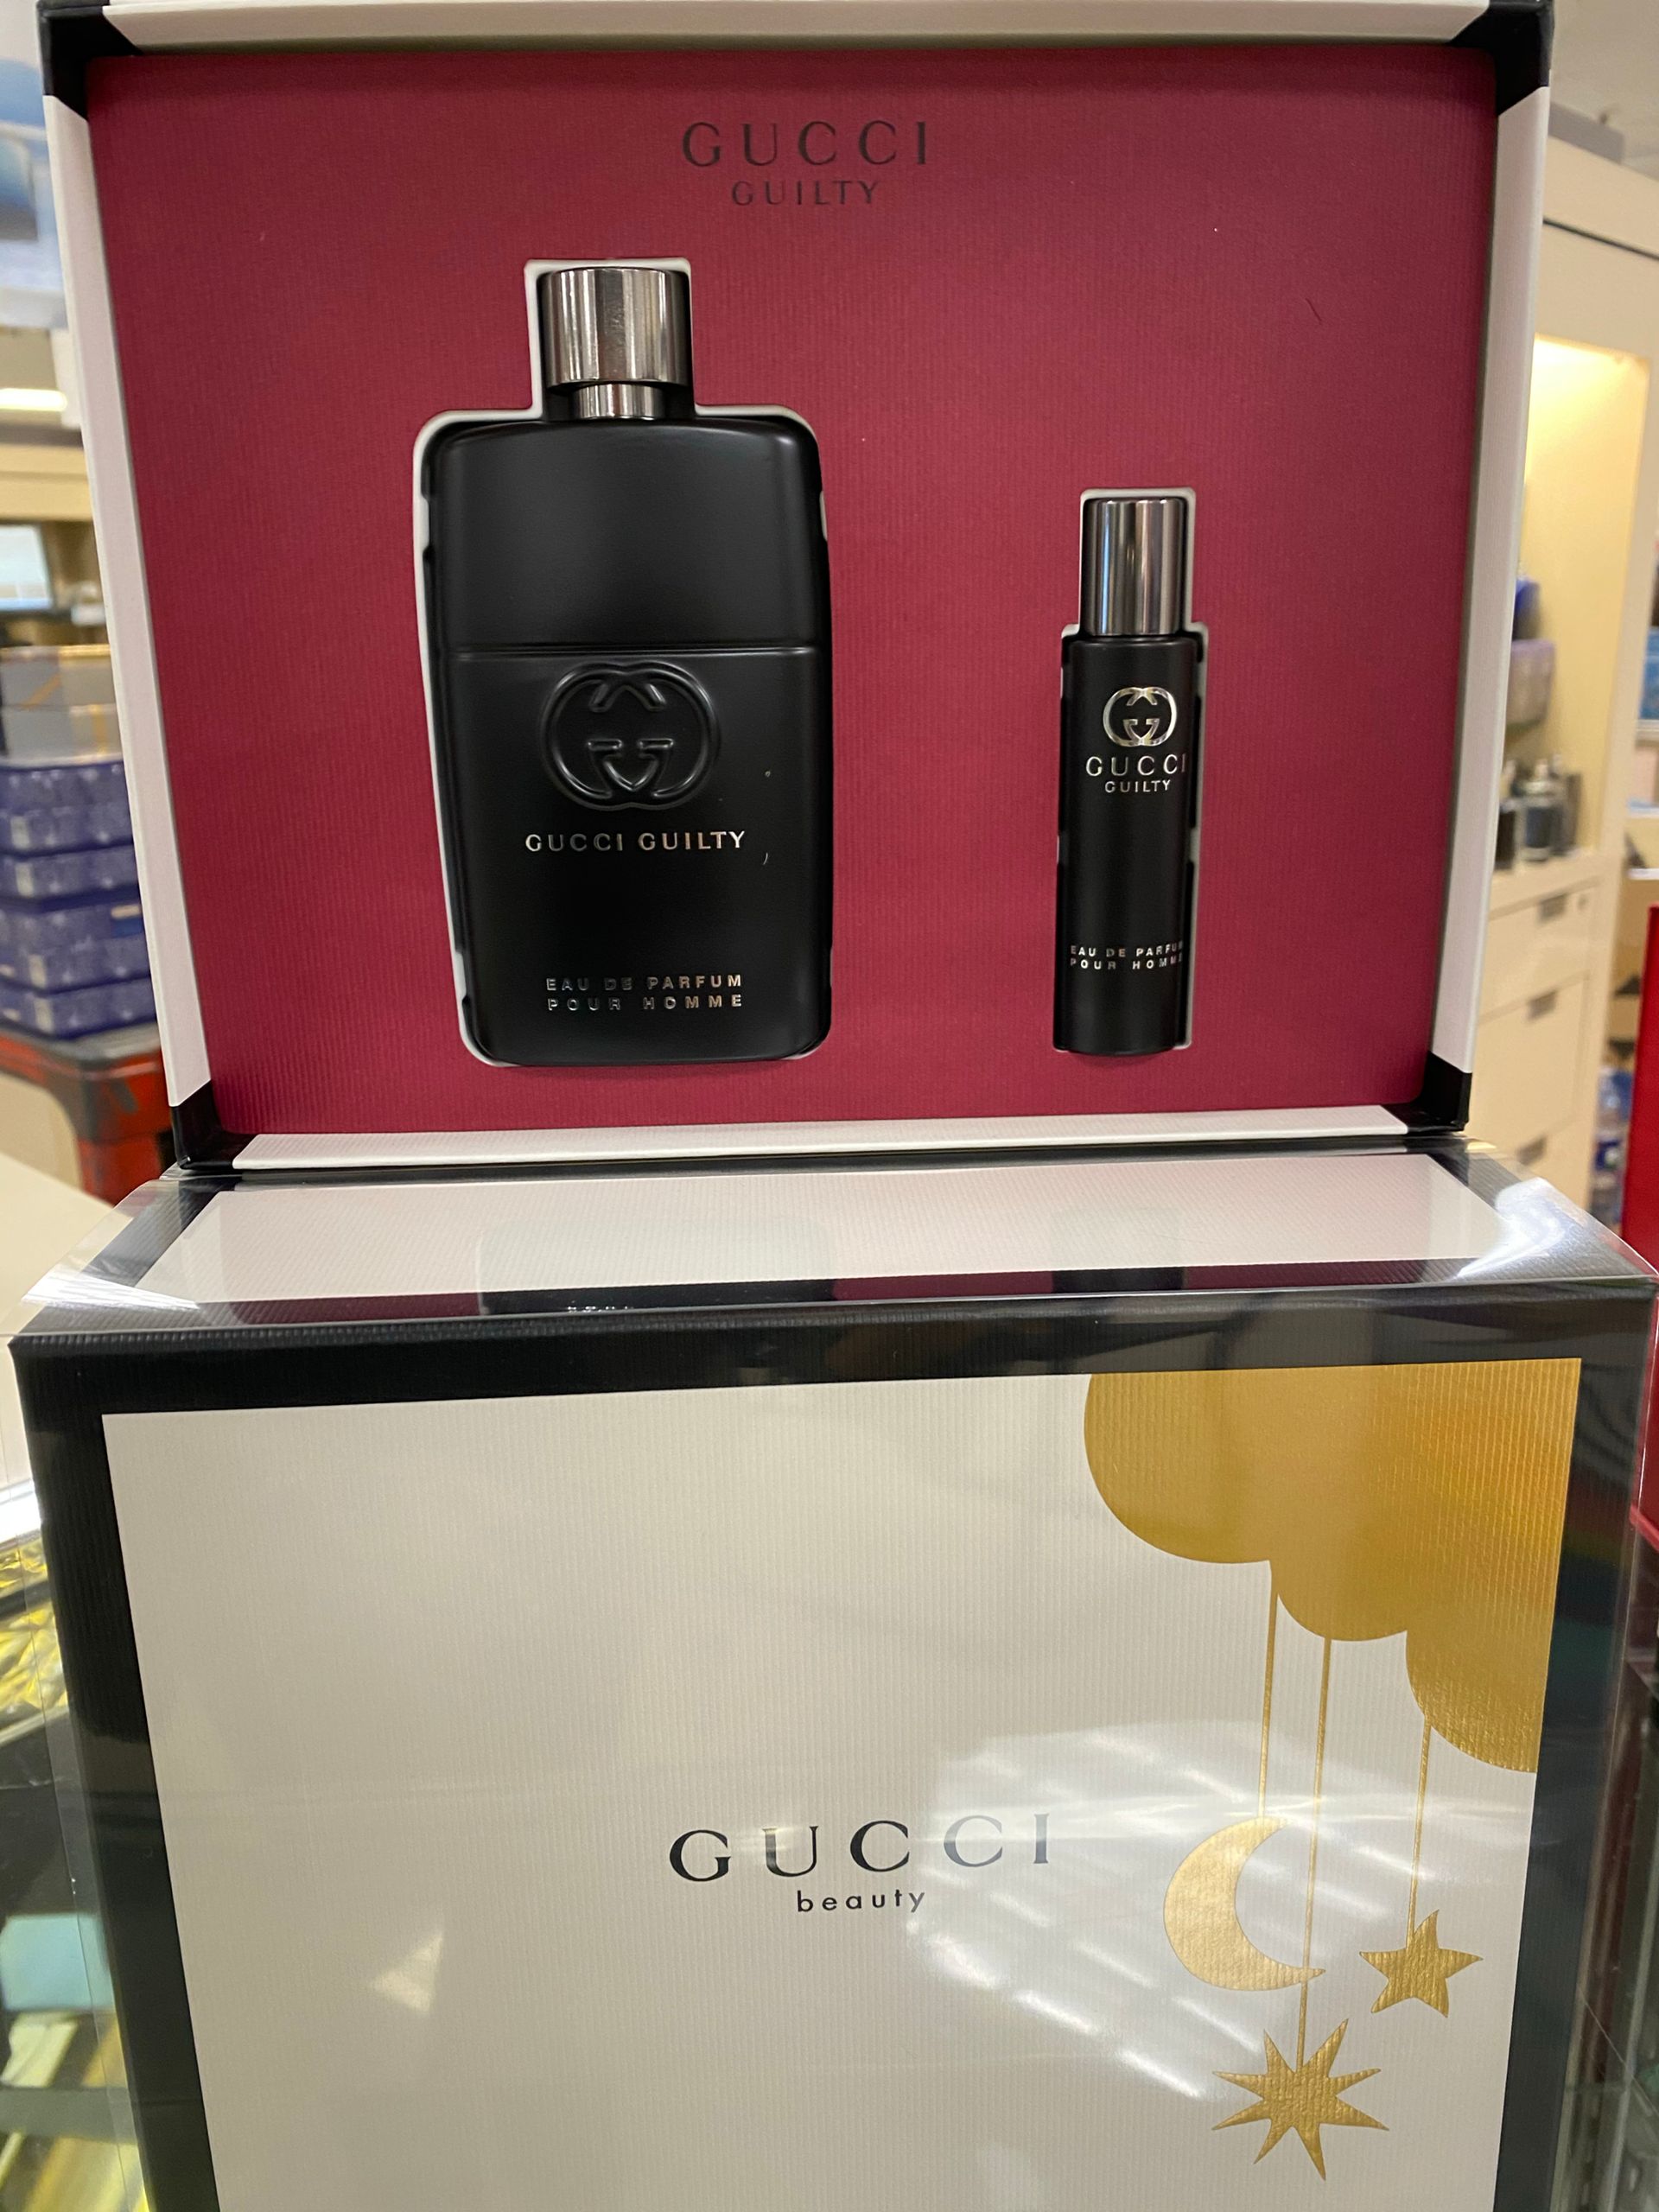 macy's gucci guilty perfume